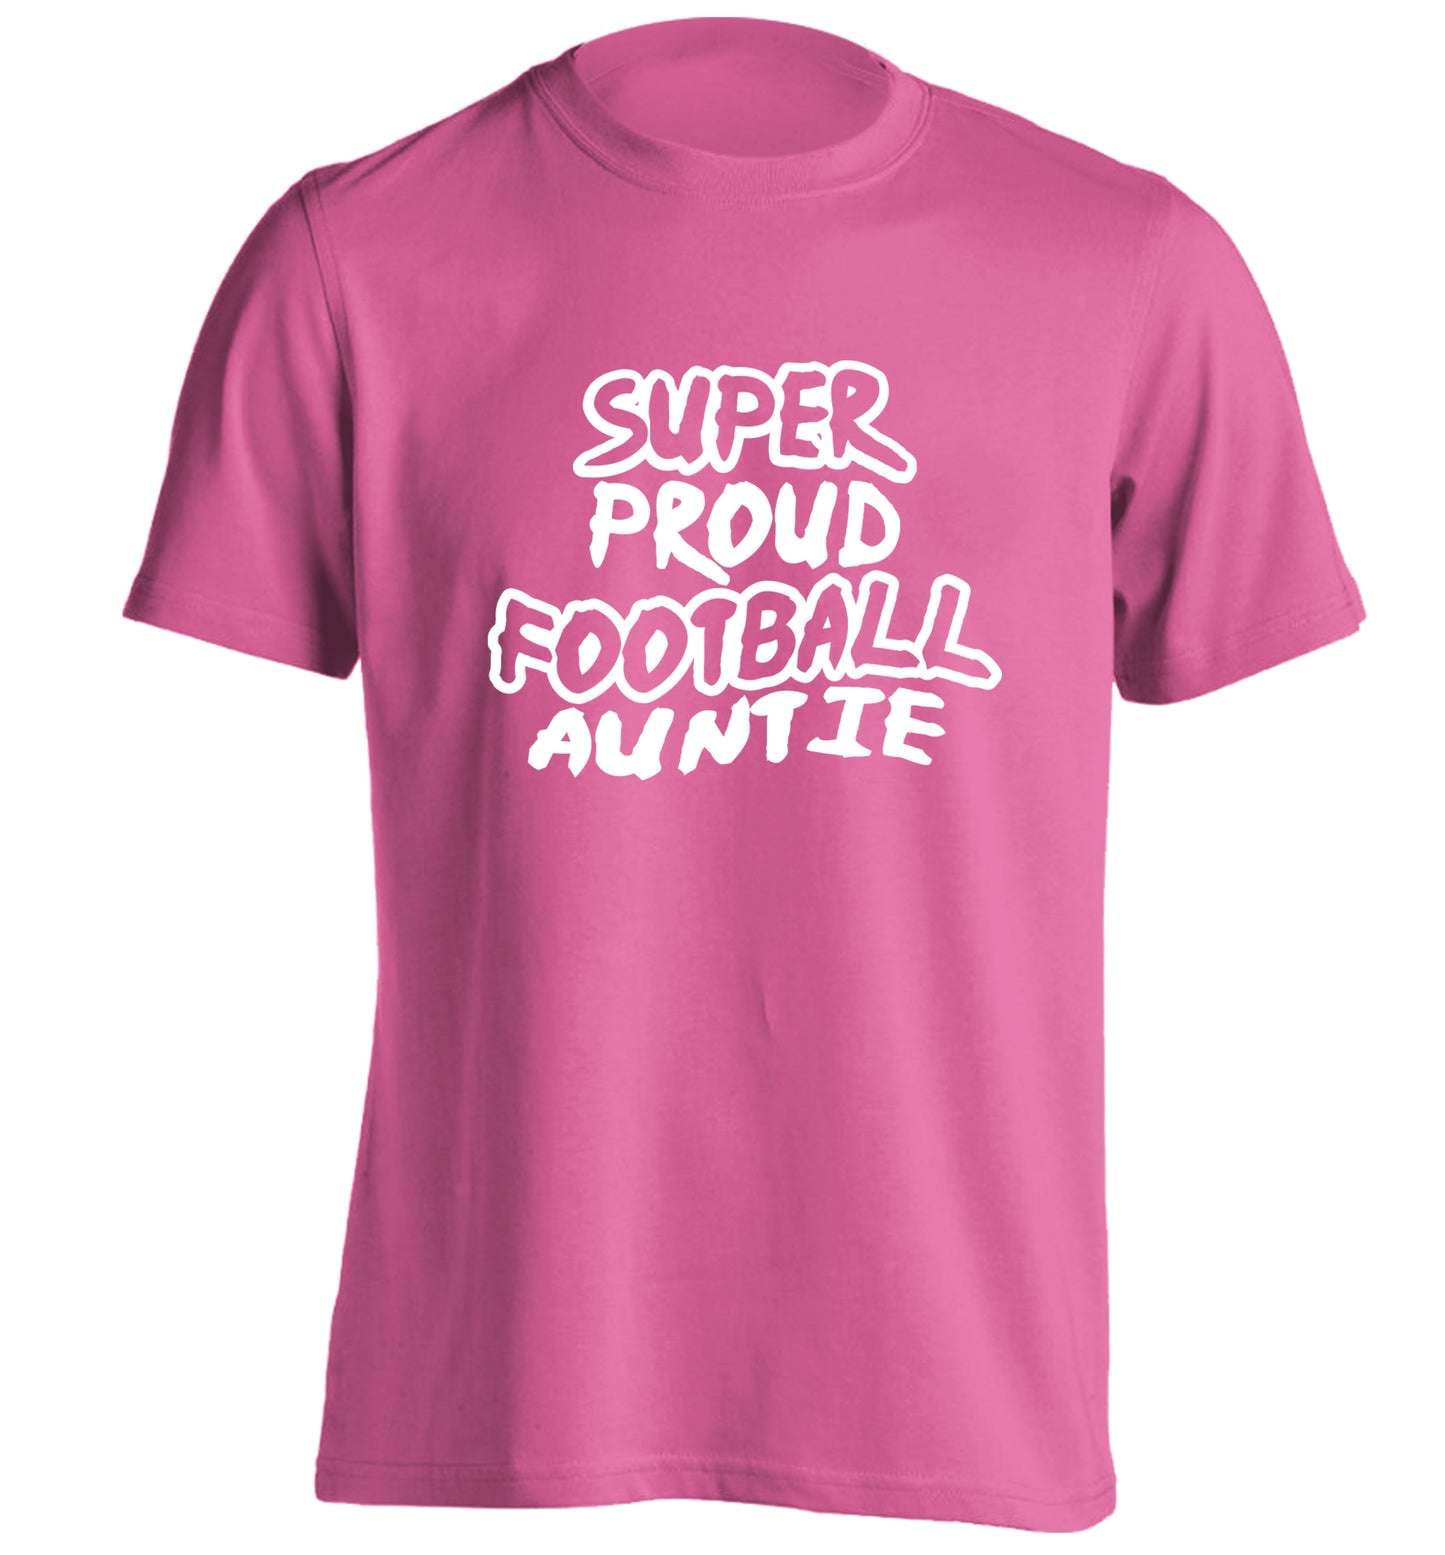 Super proud football auntie adults unisexpink Tshirt 2XL